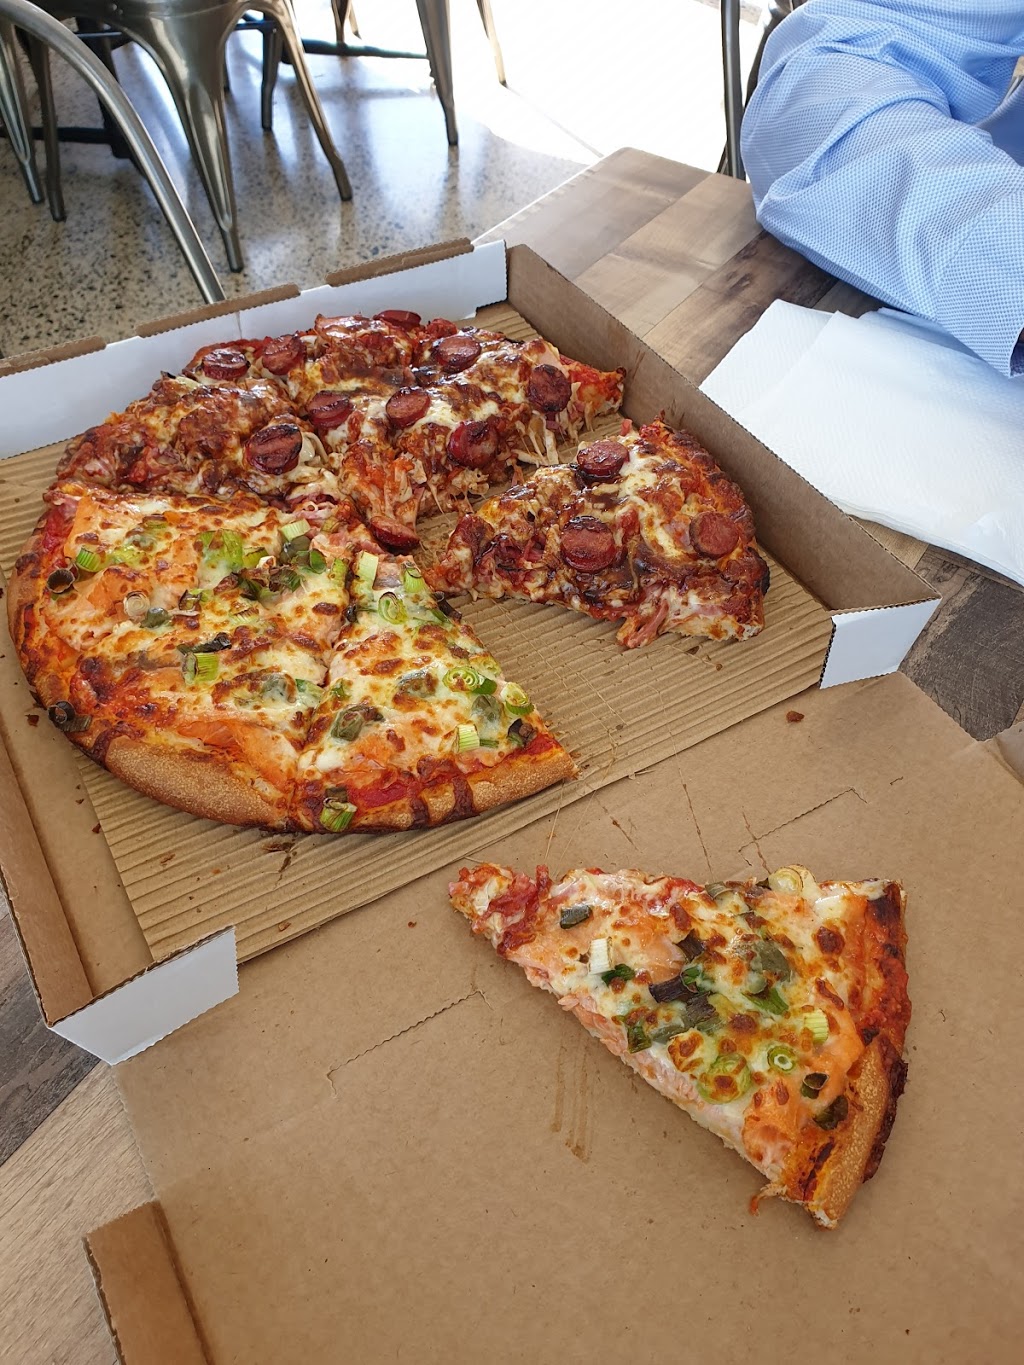 Blue Tongue Pizza, Pasta & Ribs | 14 Matilda Ave, Wollert VIC 3750, Australia | Phone: (03) 9424 2292